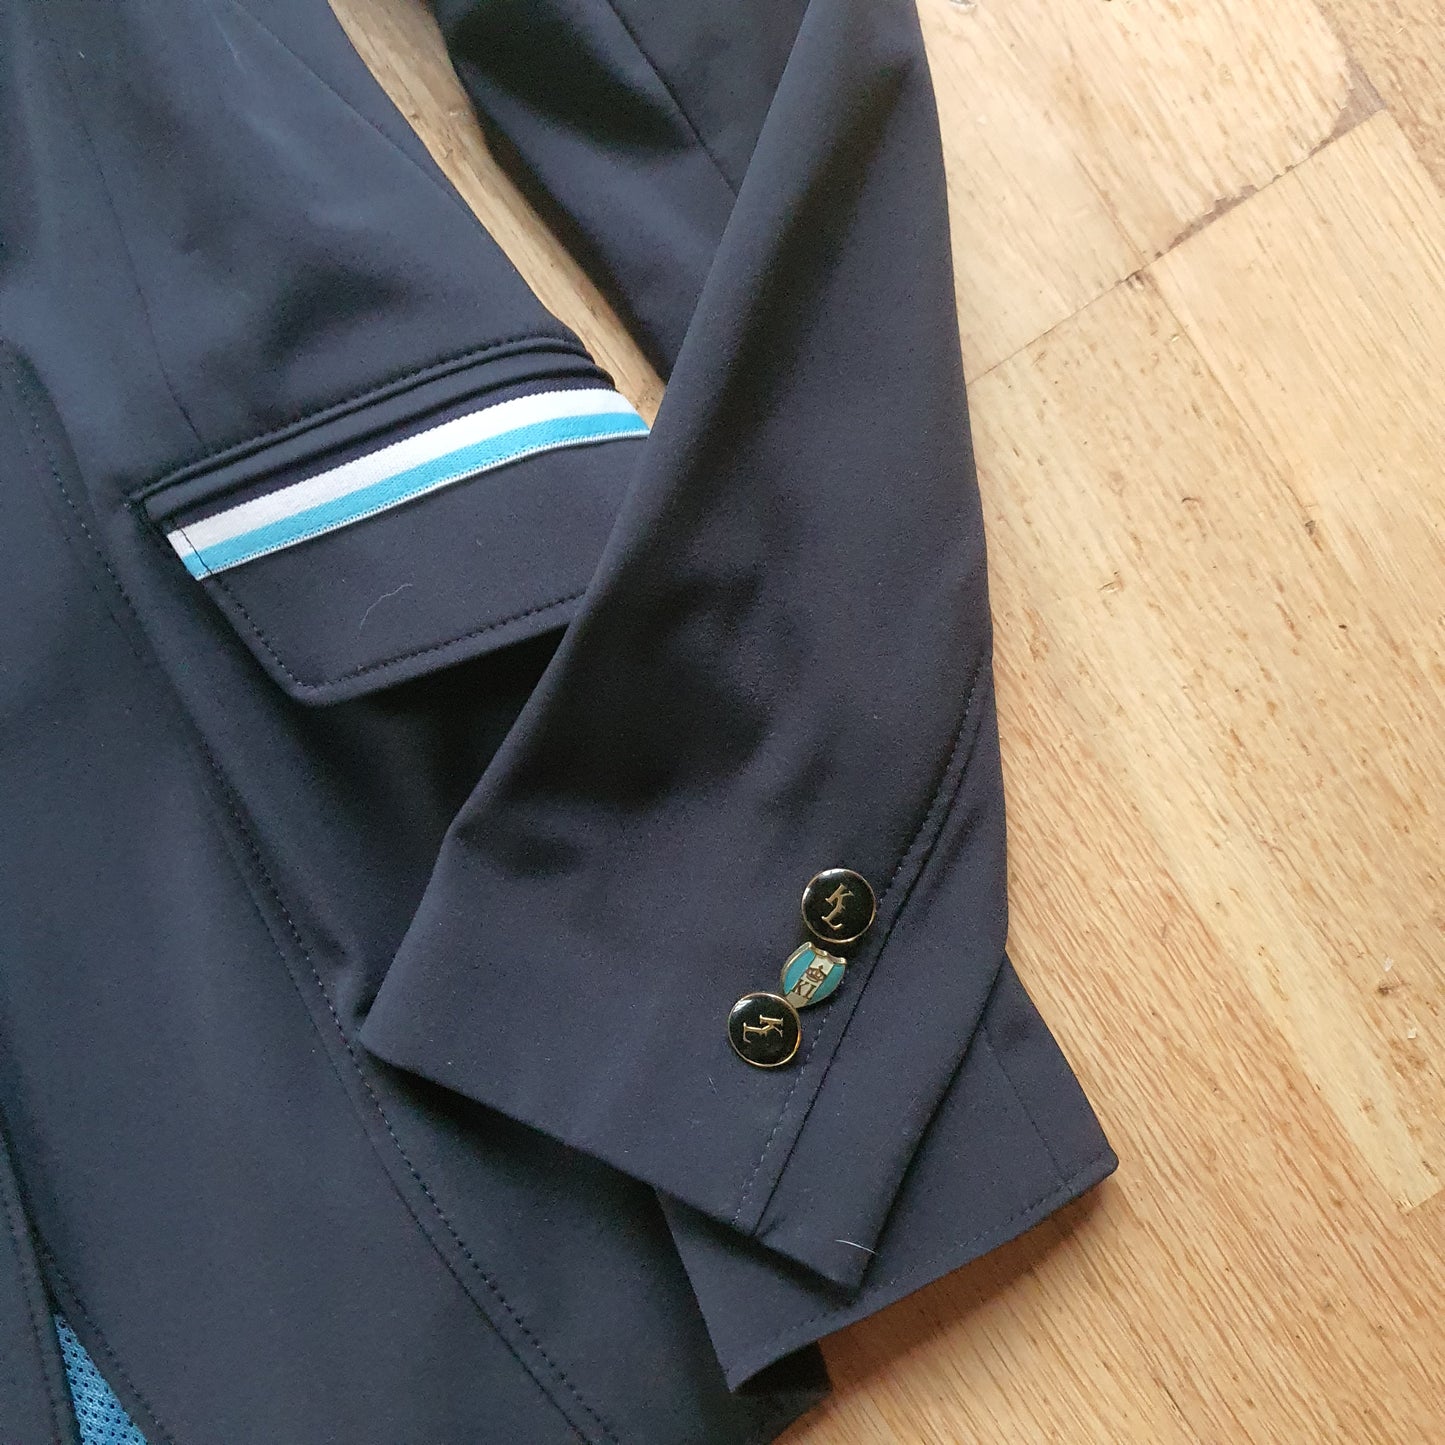 Kingsland navy show jacket, ladies size 10